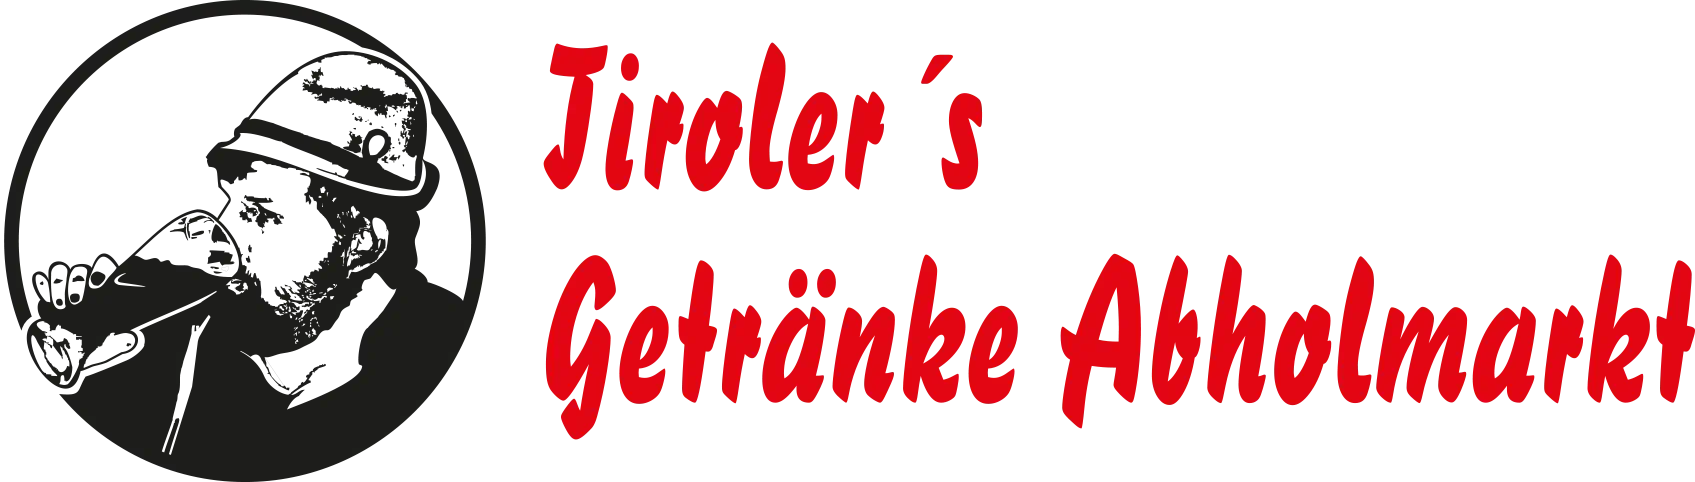 Tirolers Getränke Abholmarkt-Logo